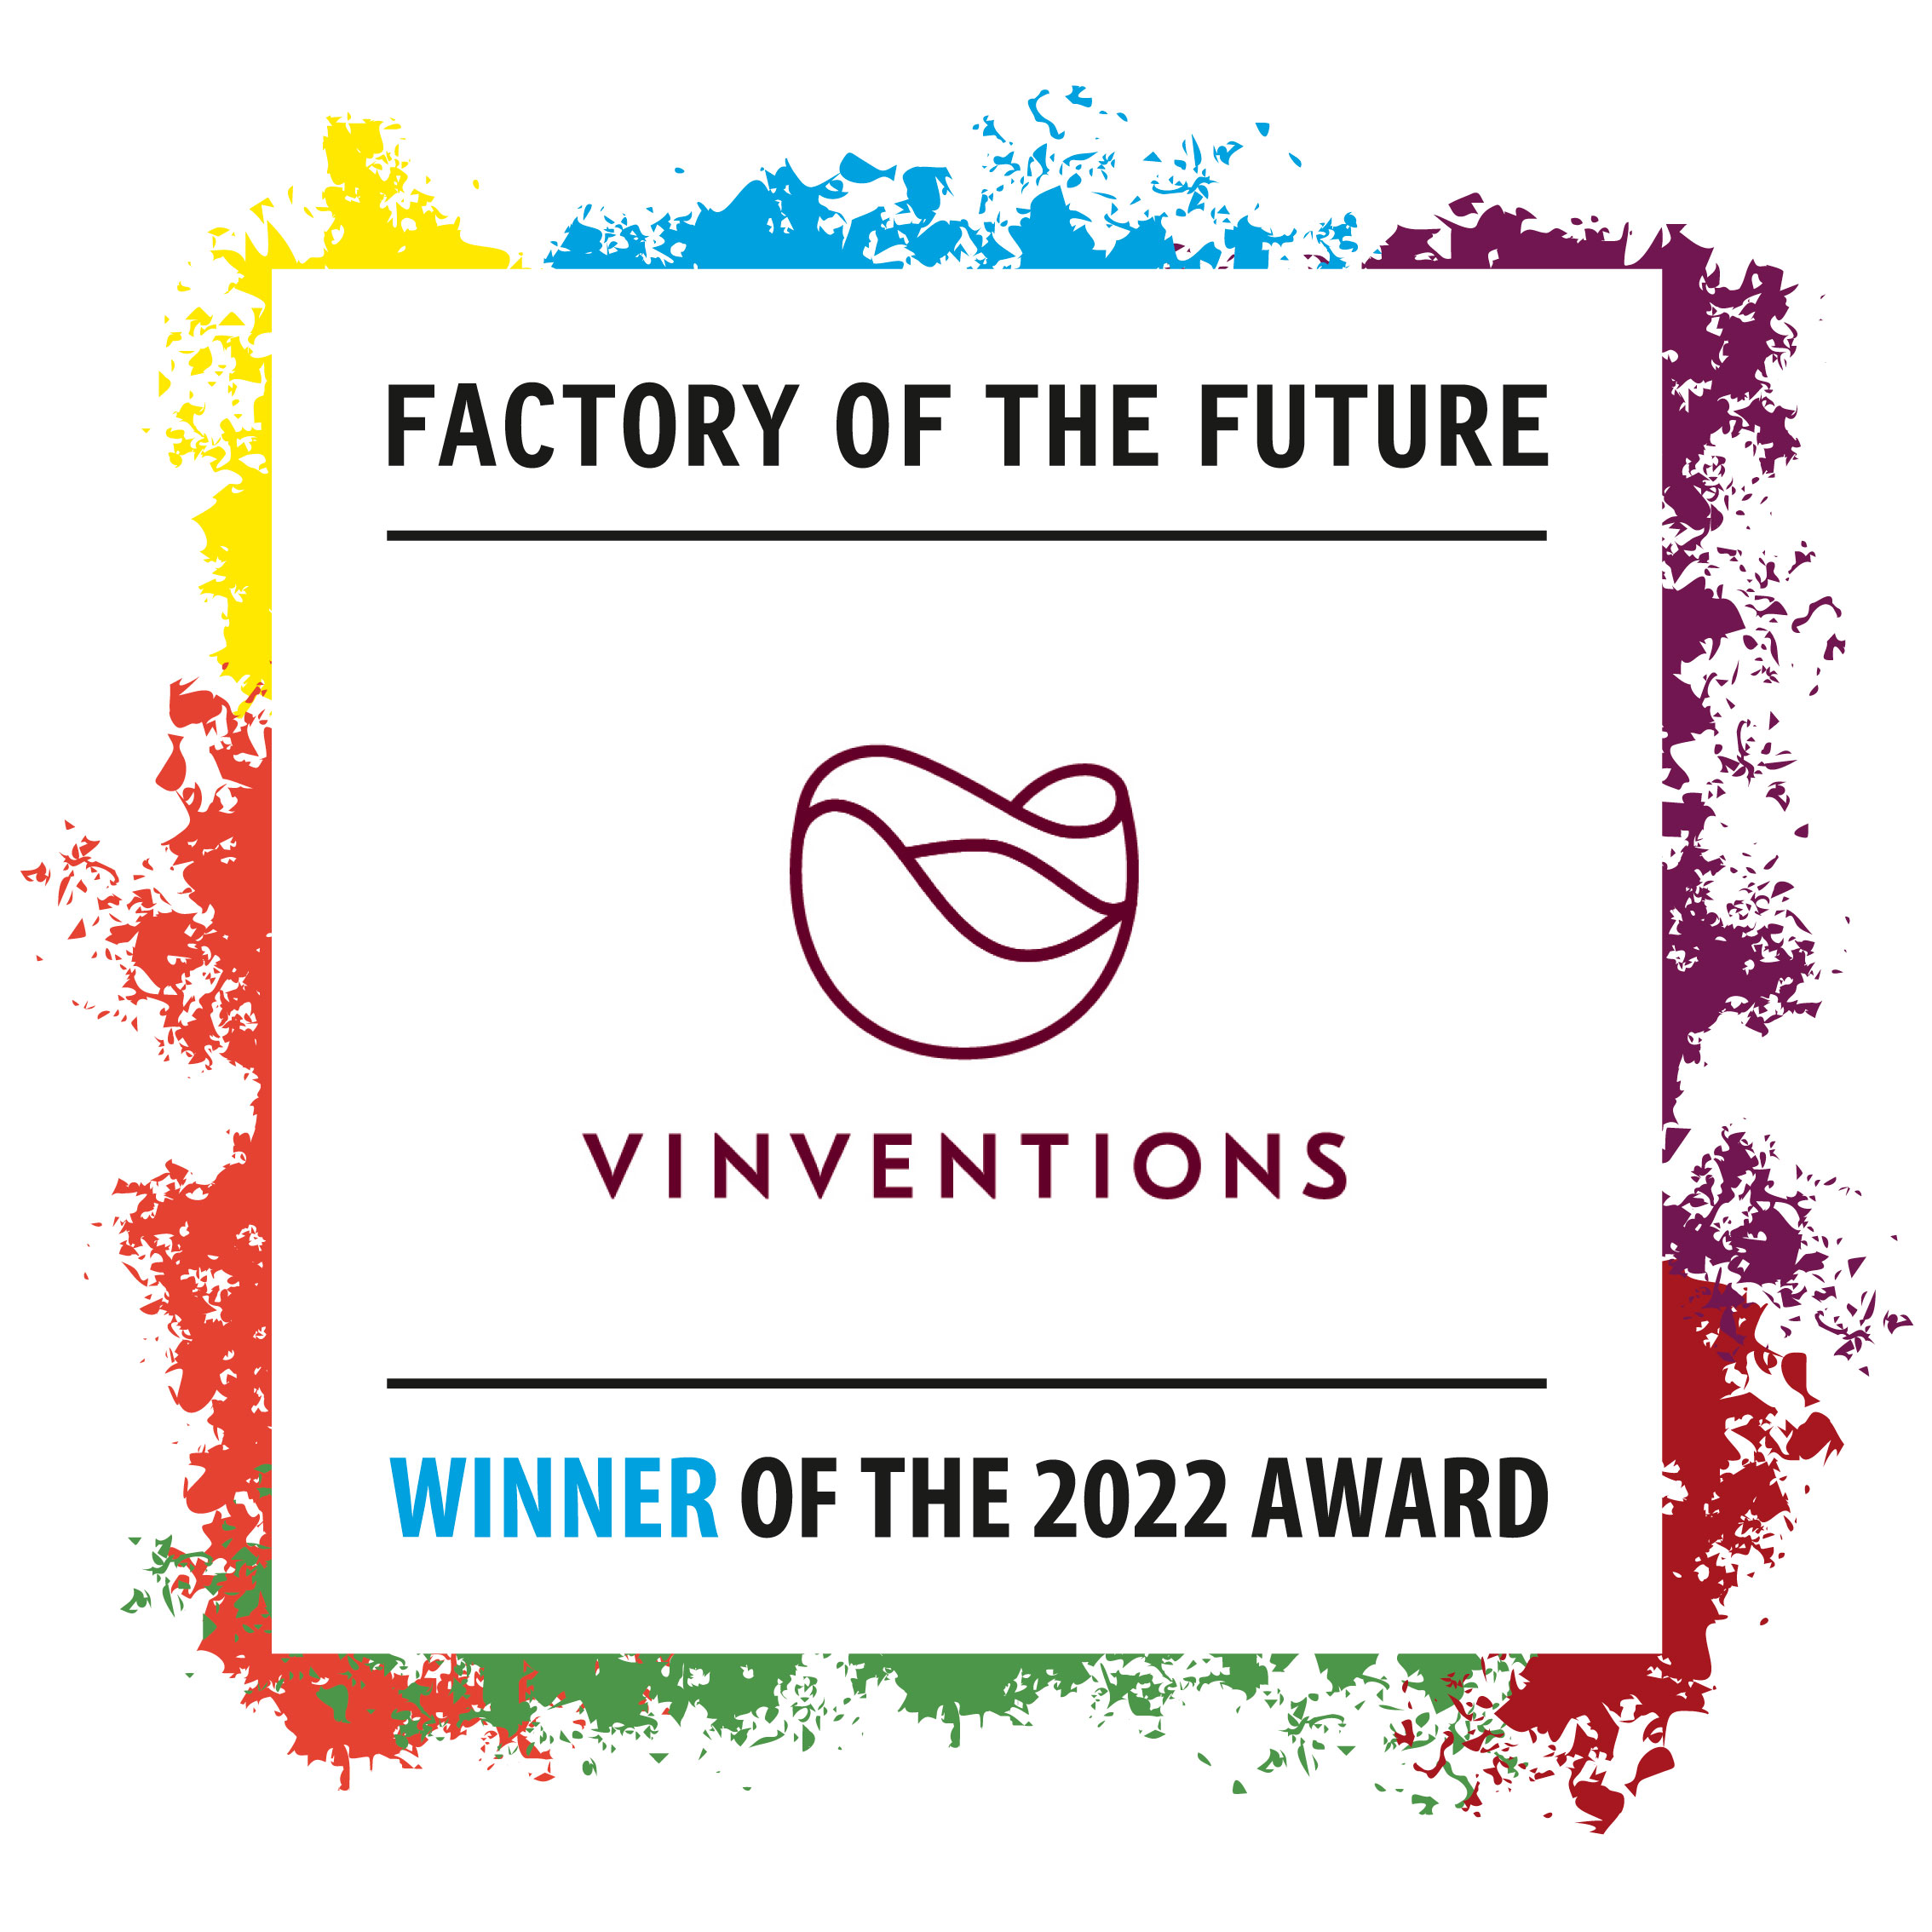 FOF_Award_2022_gagnants_vinventions.jpg